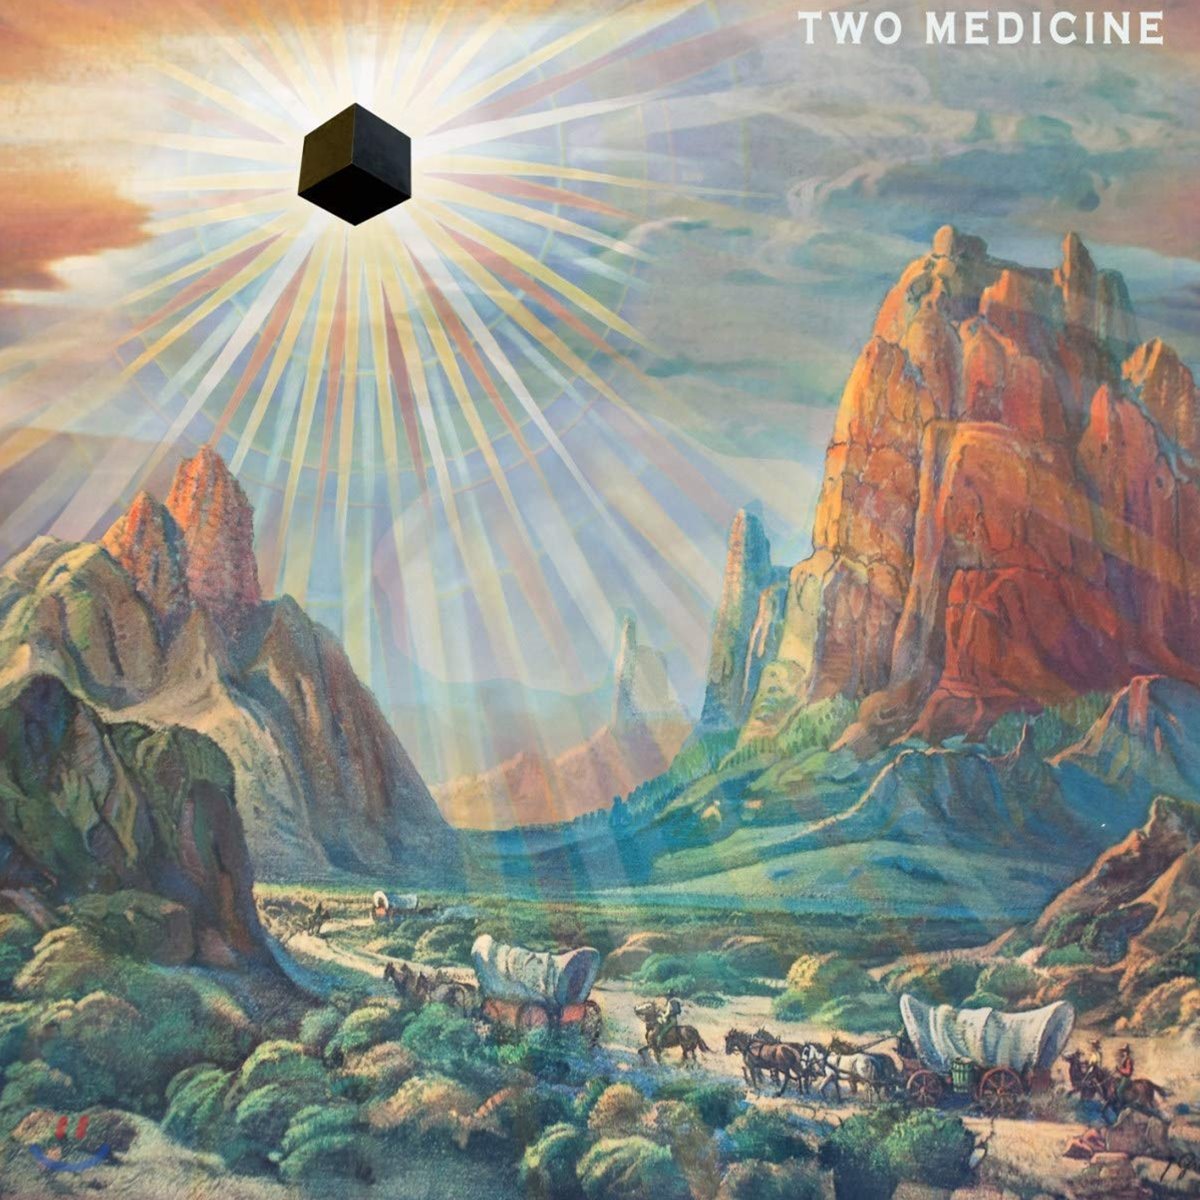 Two Medicine (투 메디신) - Astropsychosis [LP]